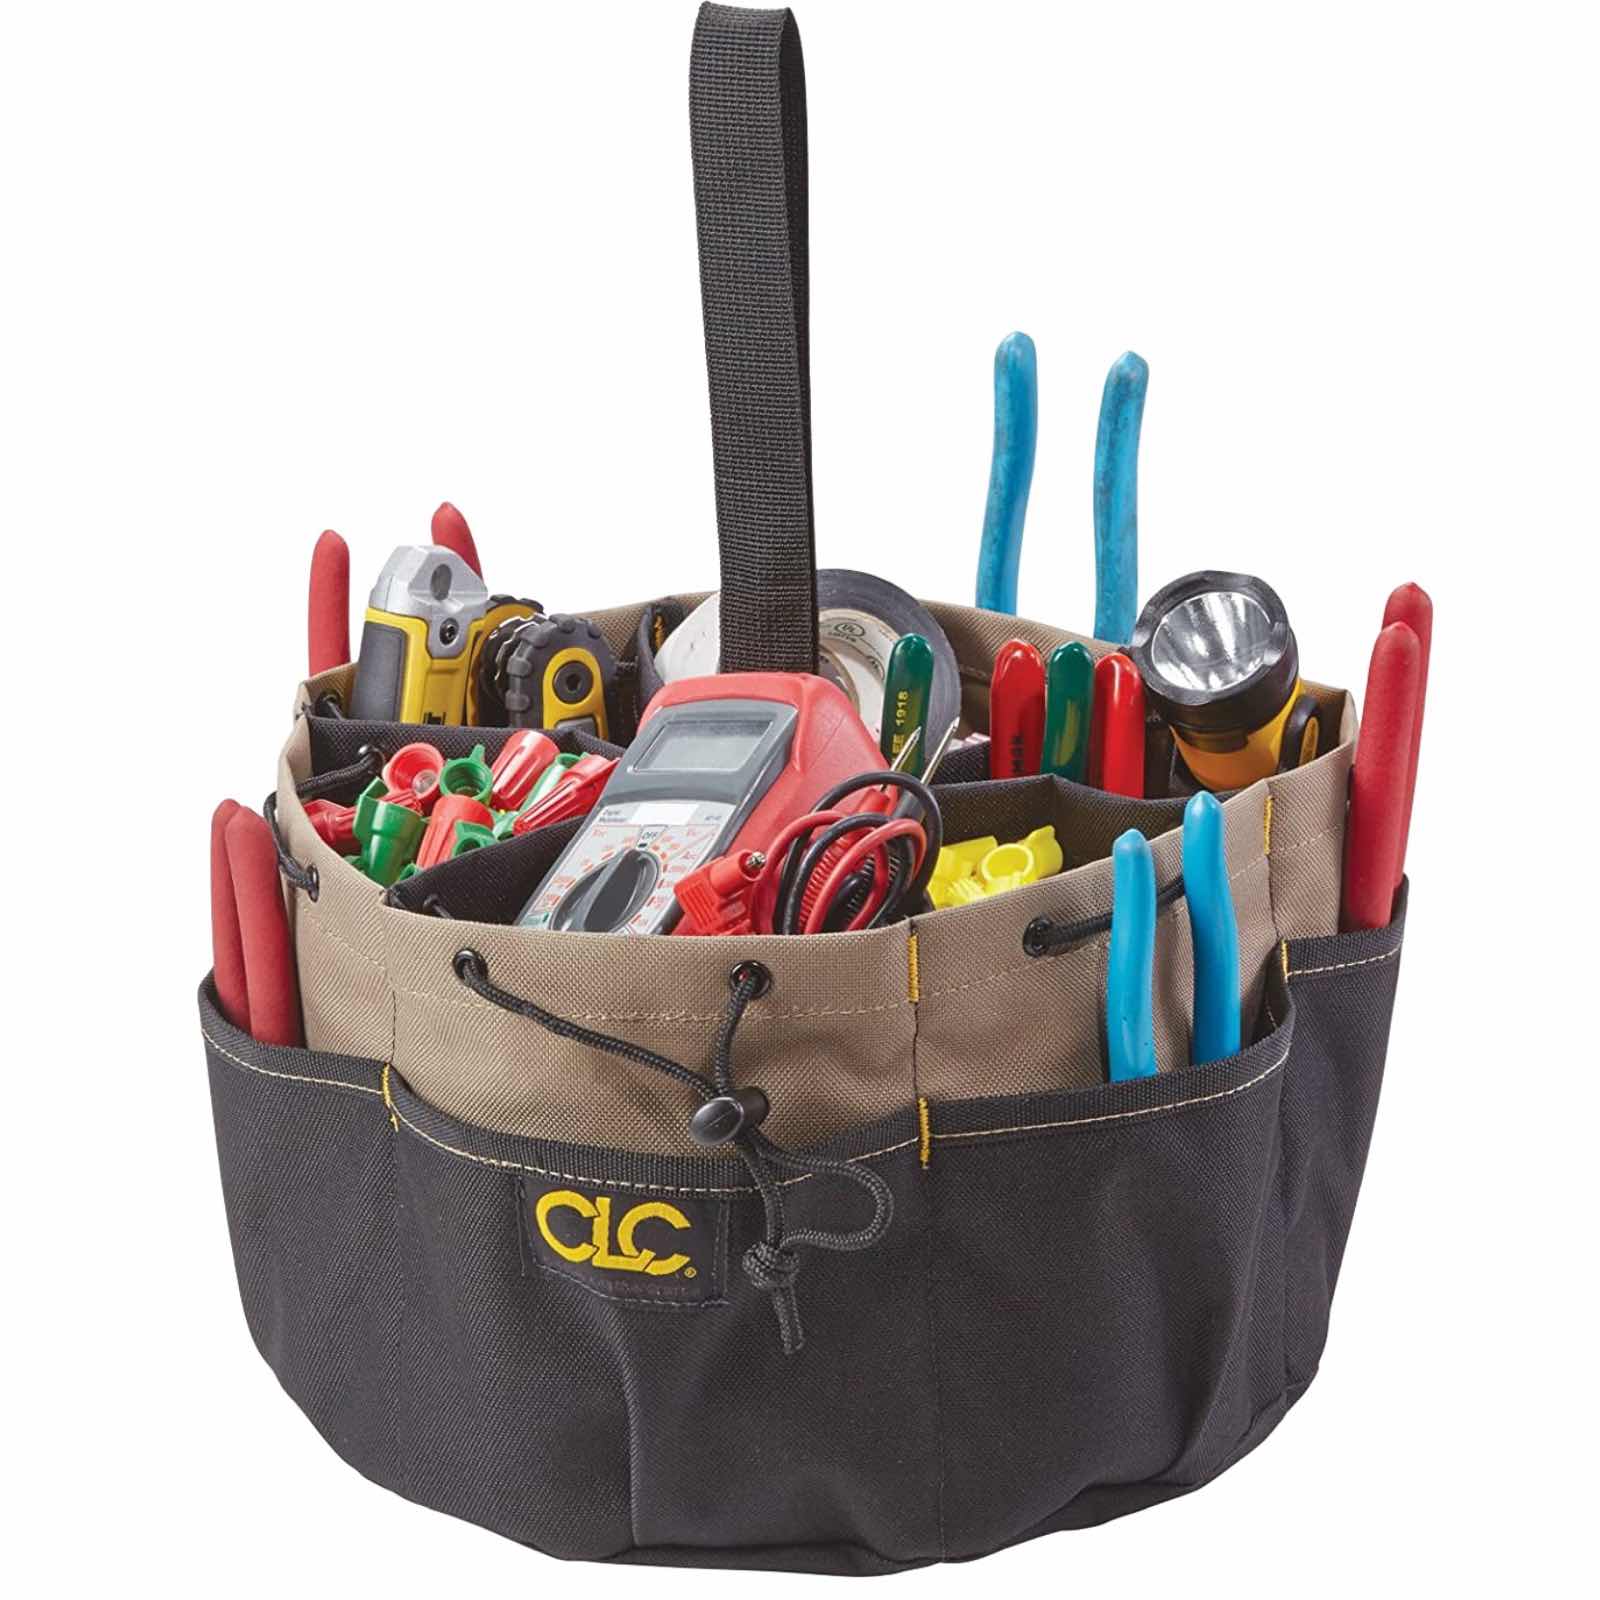 clc-custom-leathercraft-18-pocket-drawstring-bucketbag-full